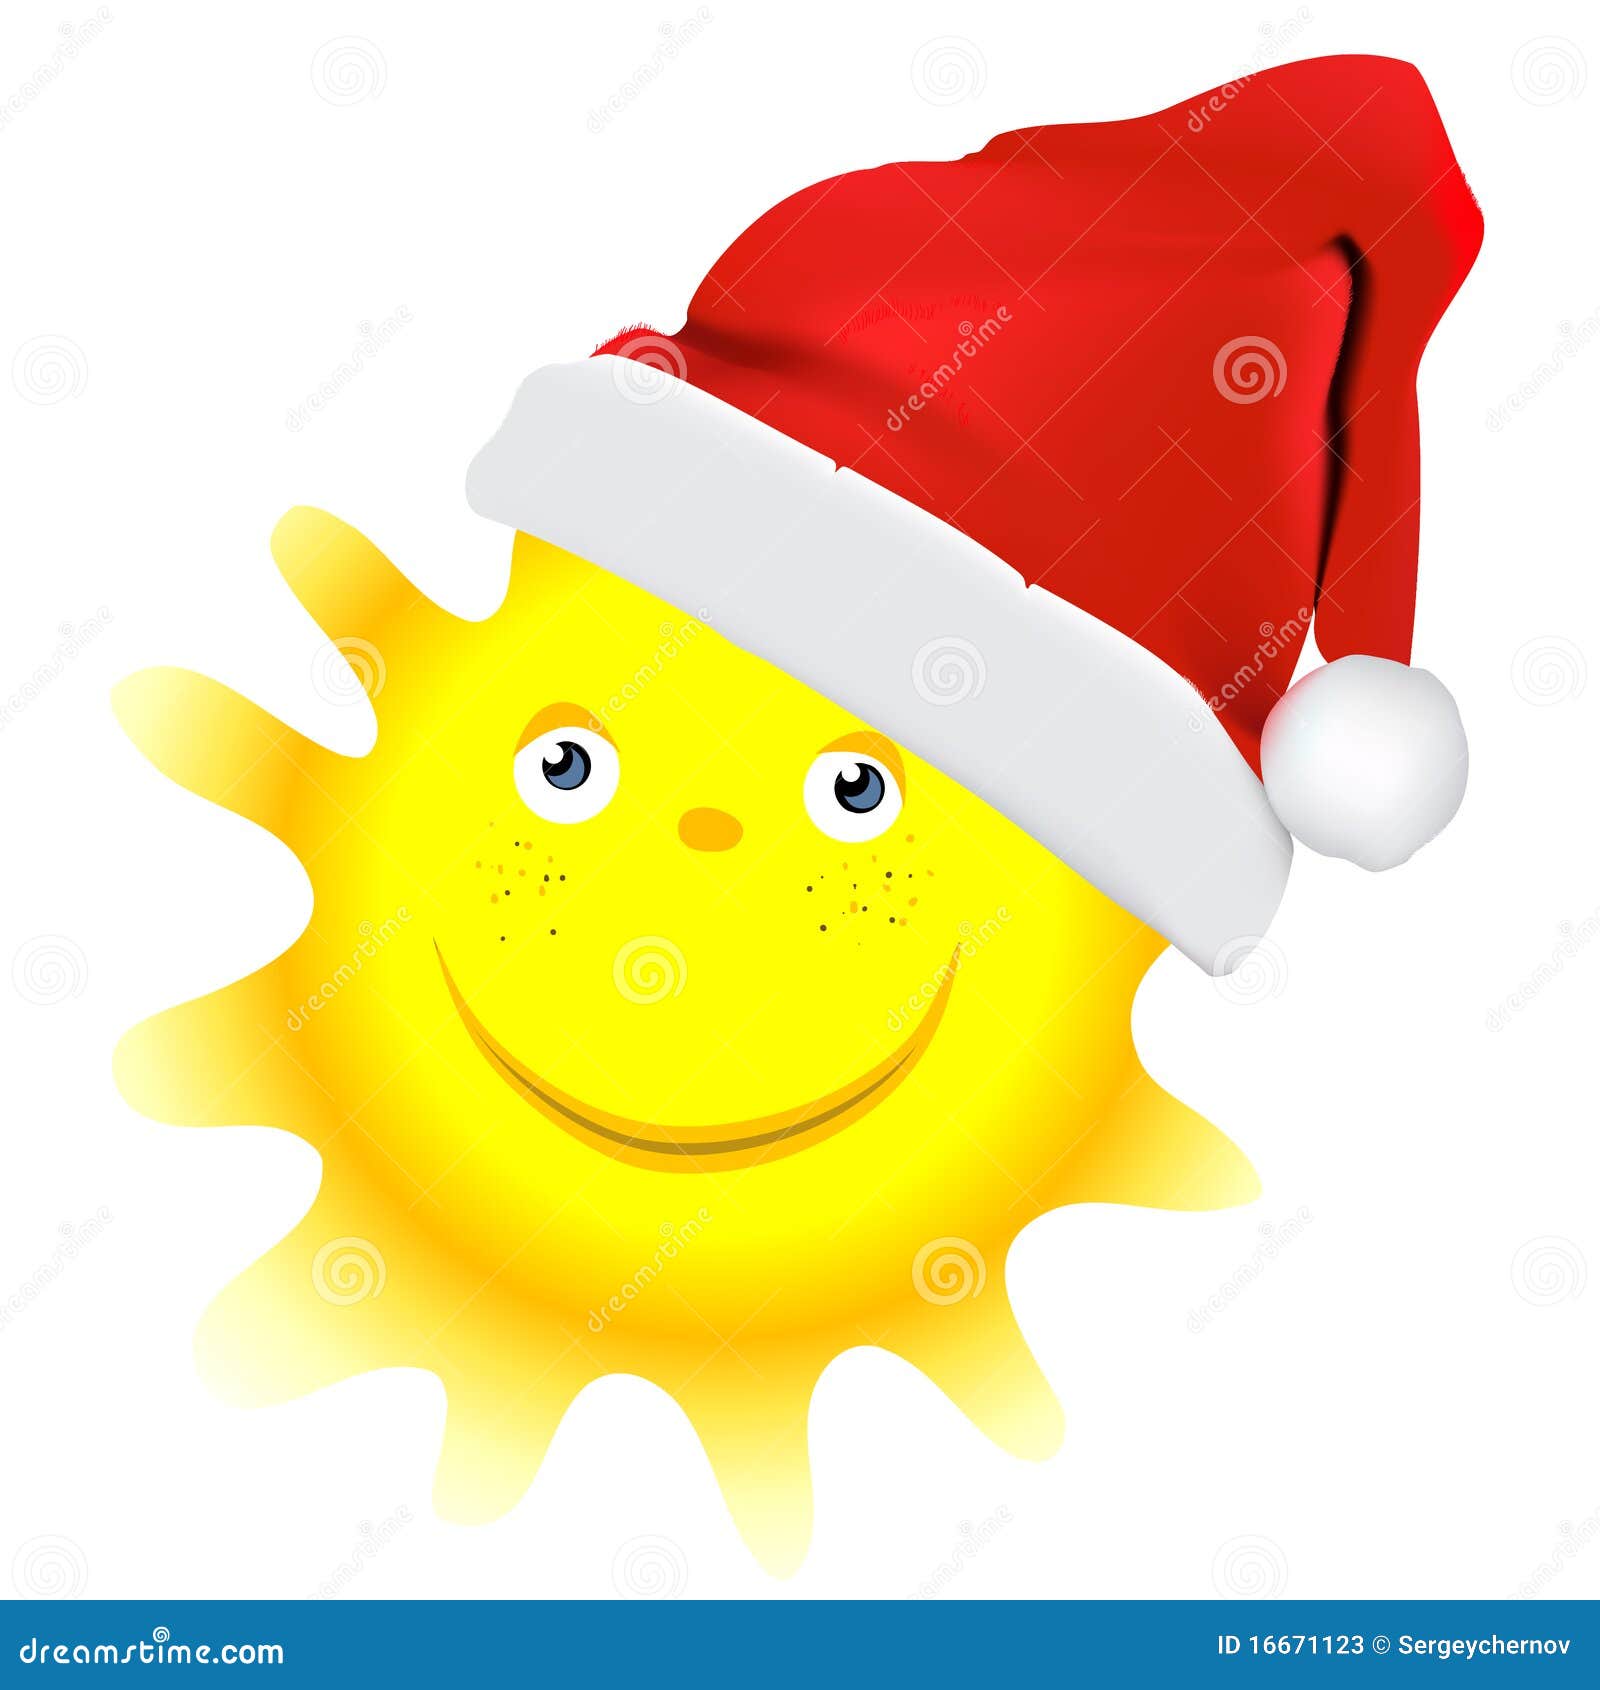 Christmas Sun Design Stock Photos - Image: 16671123